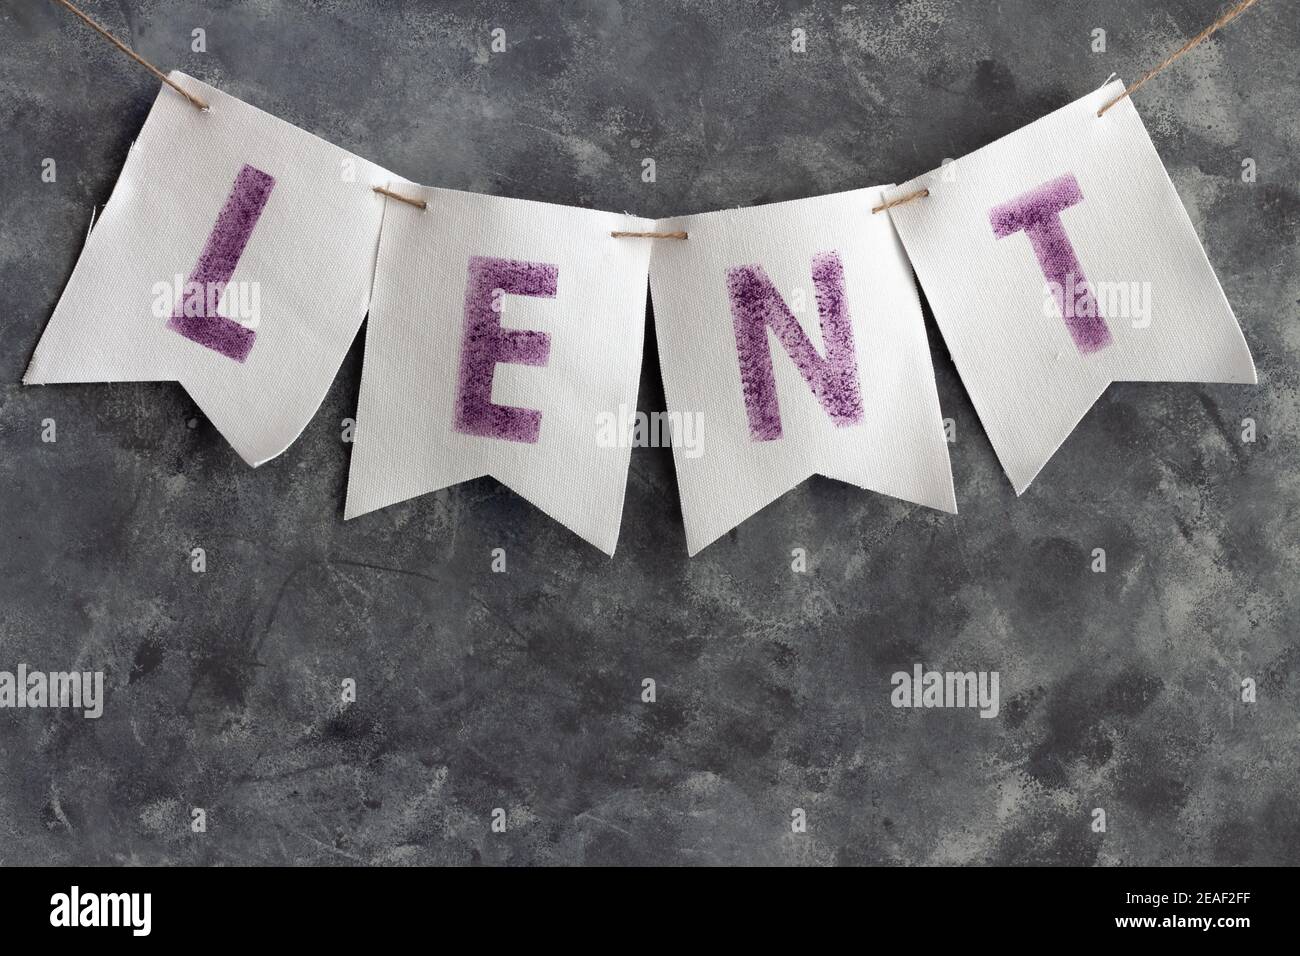 Lent word white cloth banner on dark background Stock Photo - Alamy